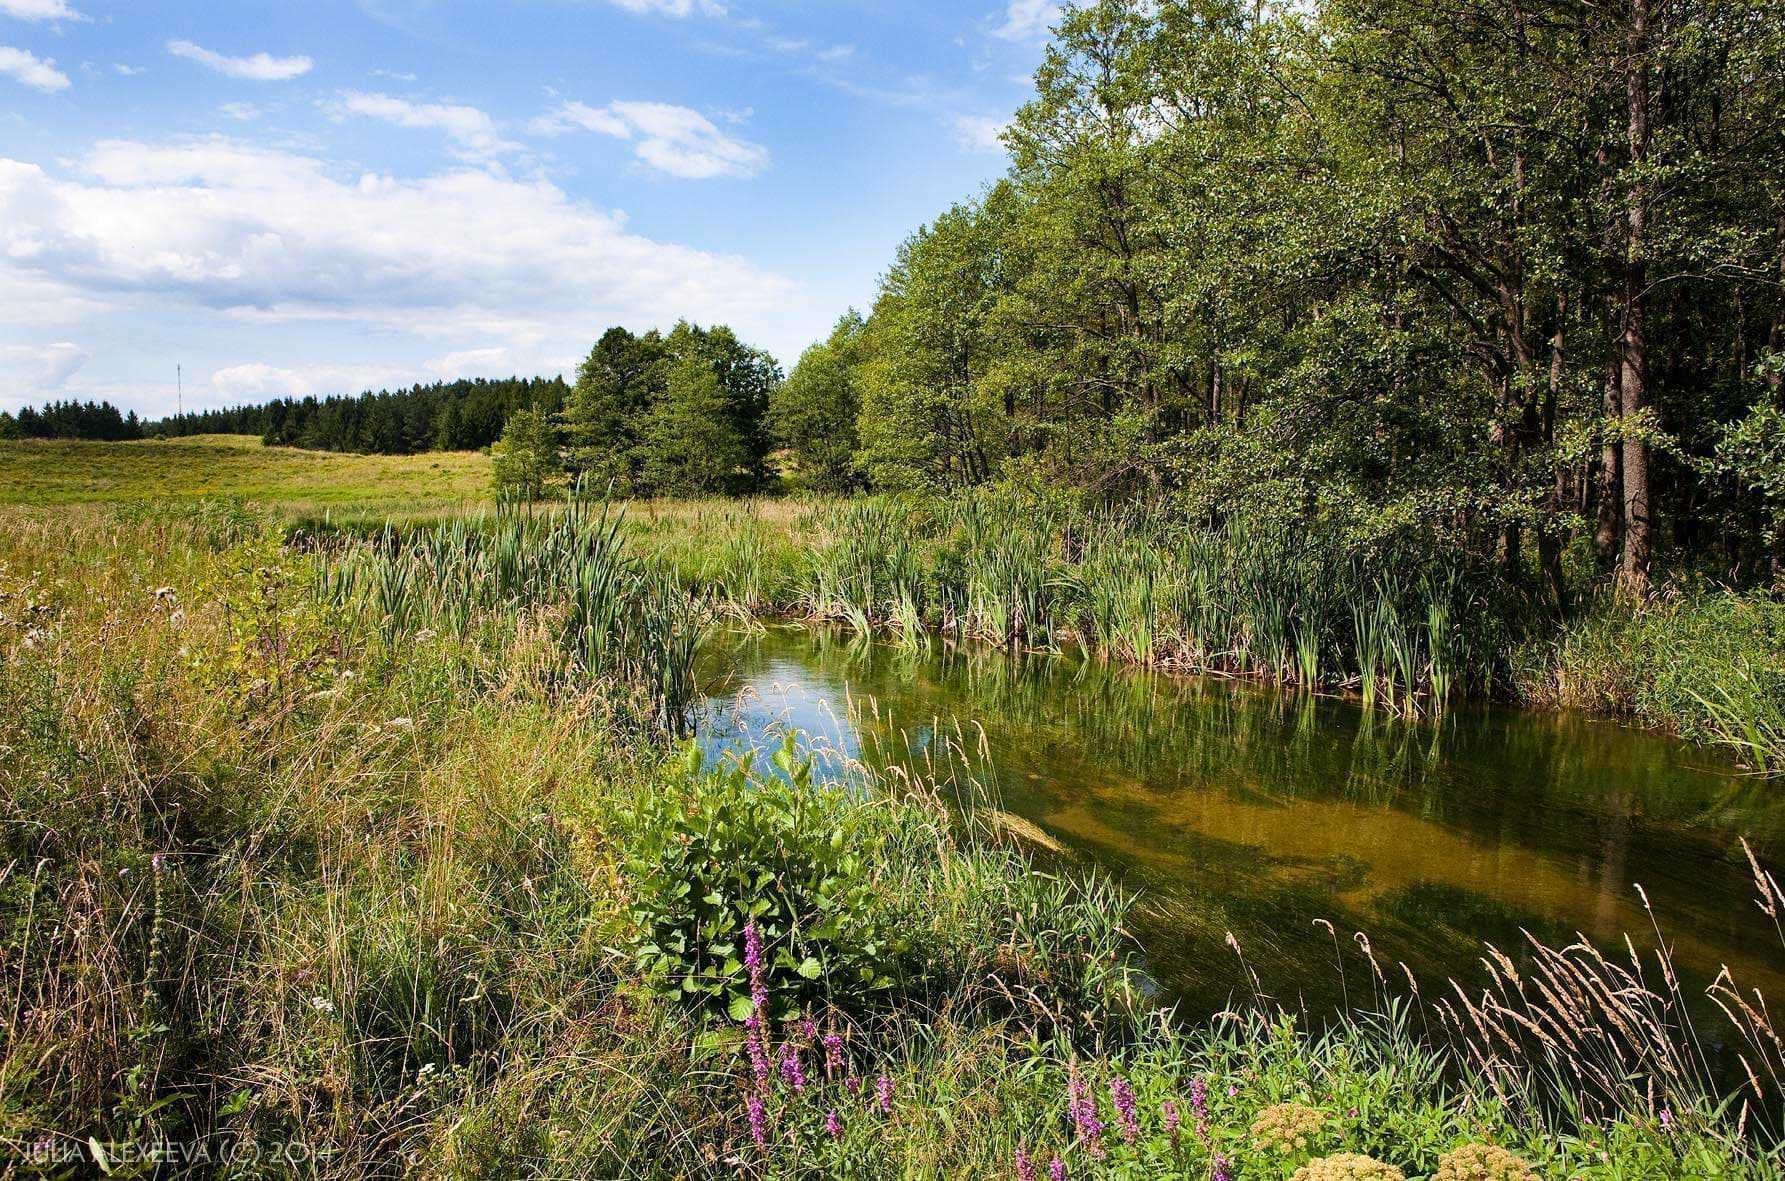 Staatliche haushaltsplangebundene Einrichtung des Kaliningrad Gebiets "Naturpark" Vischtynezkij"